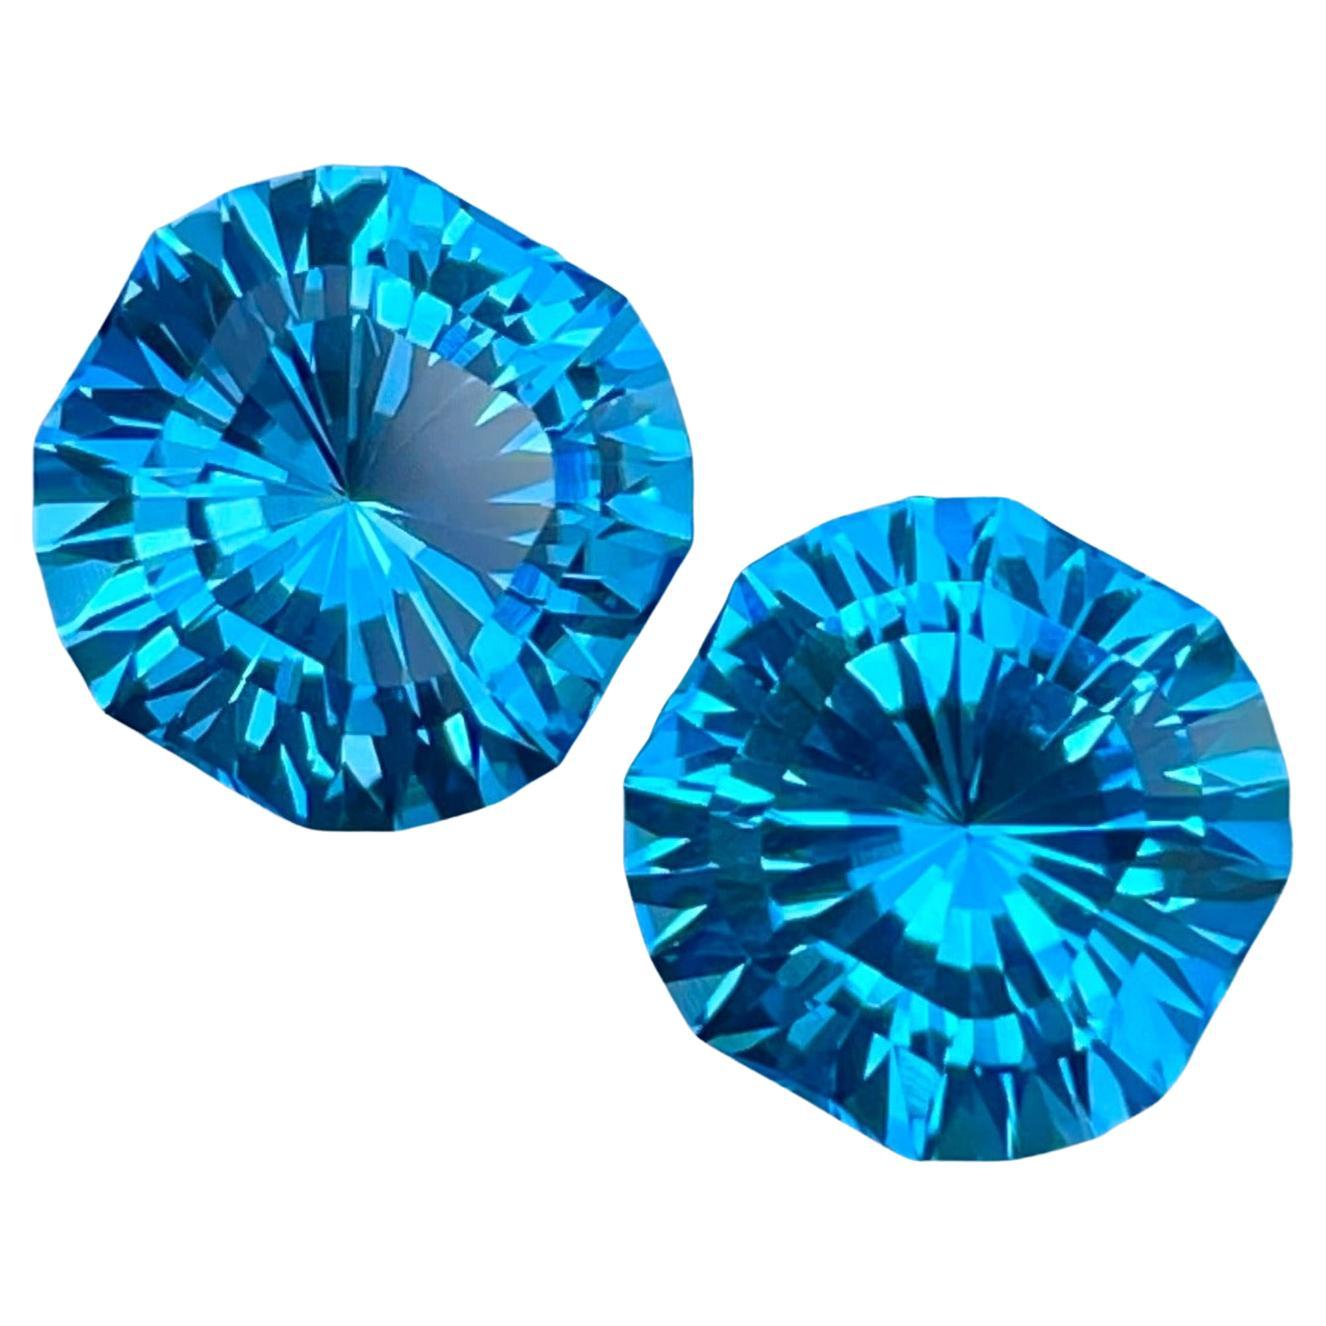 Fancy Cut Neon Blue Topaz Pair 13.90 carats Natural Madagascar's Gemstones For Sale